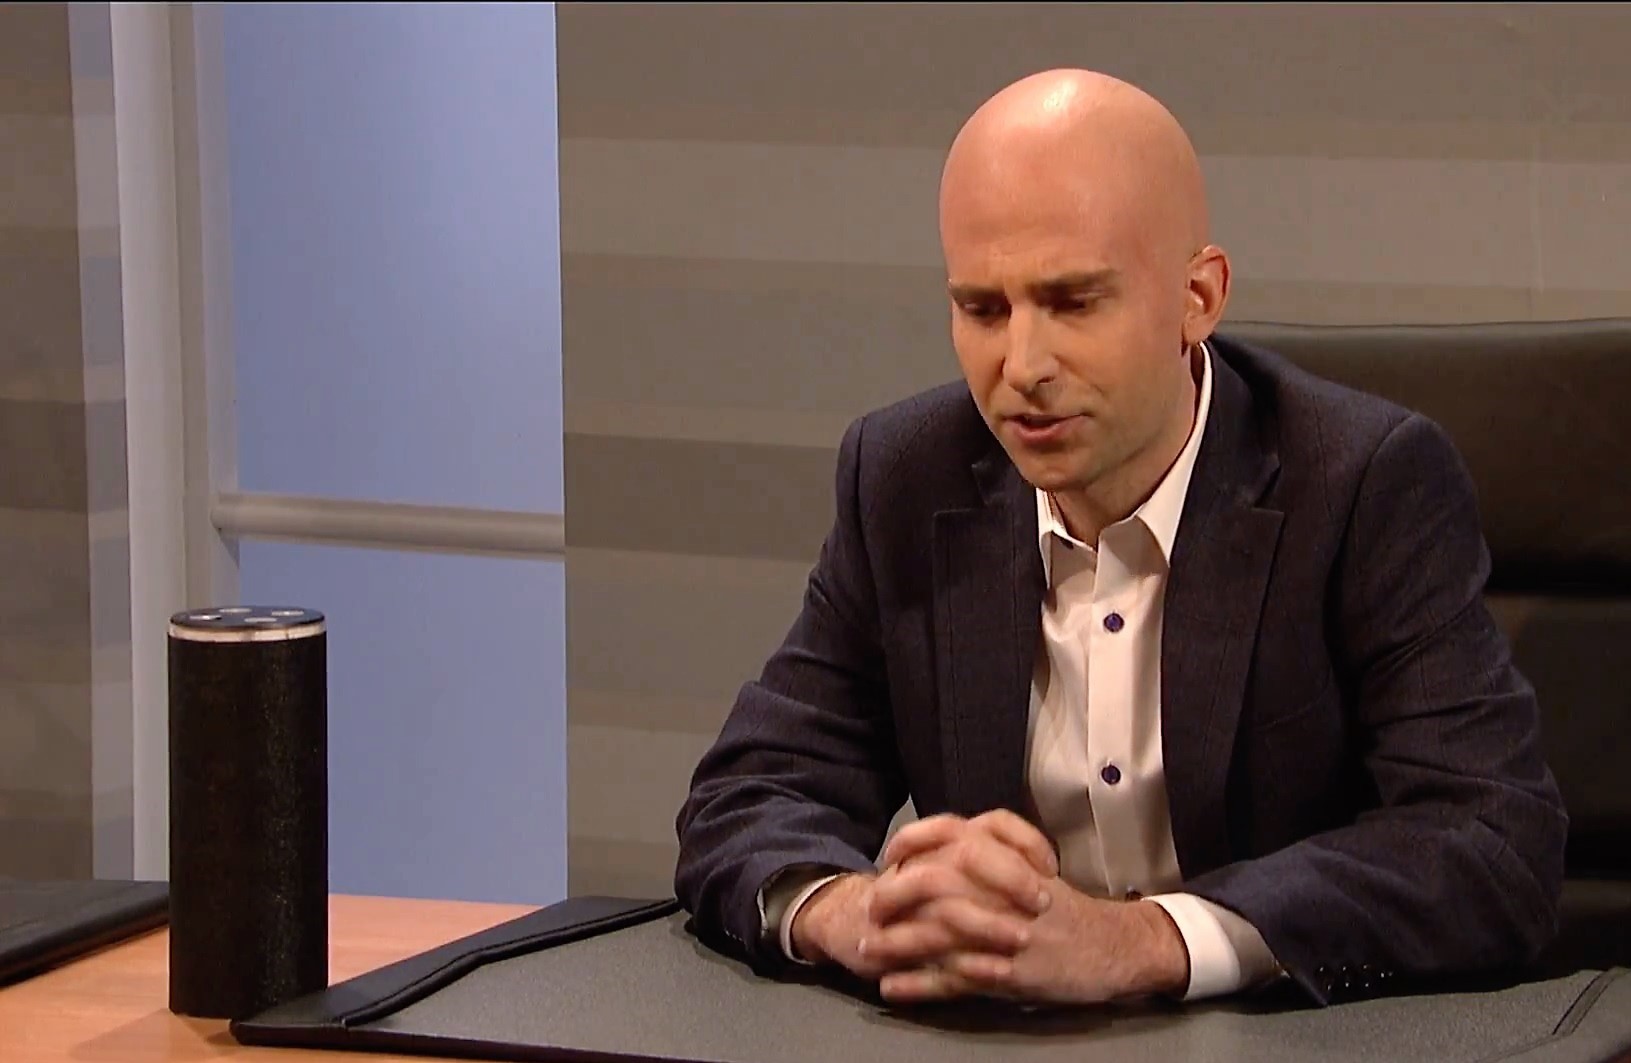 Kyle Mooney playing Jeff Bezos on SNL. 